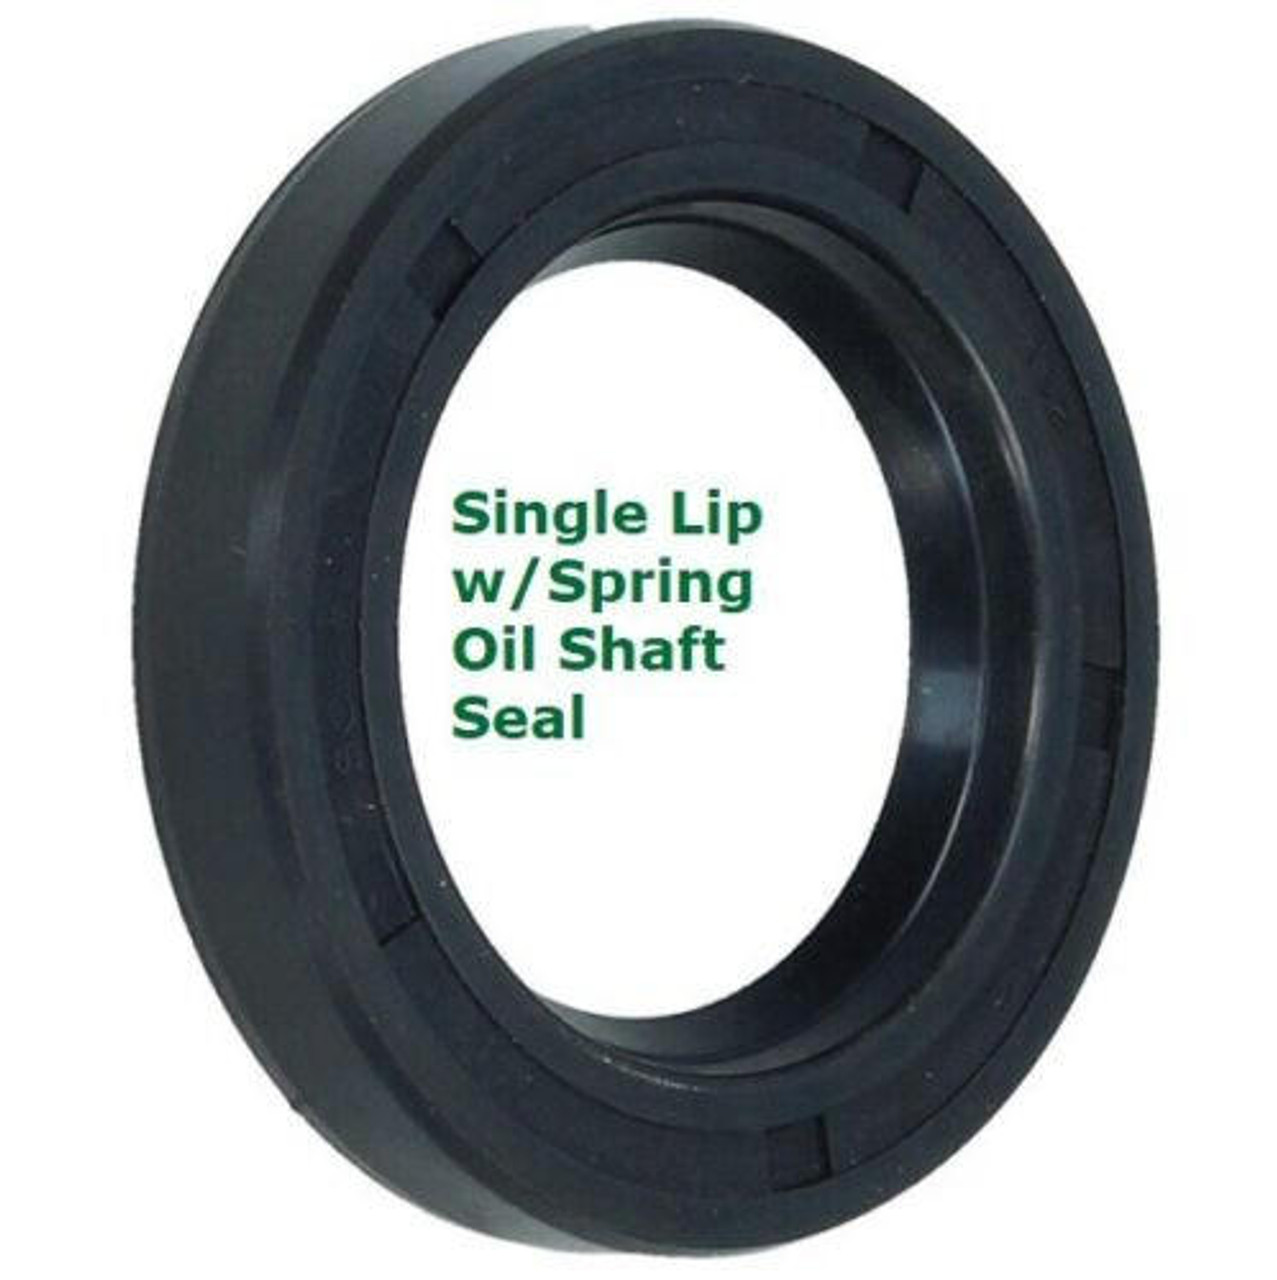 Metric Oil Shaft Seal 12 x 24 x 10mm  Single Lip   Price for 1 pc